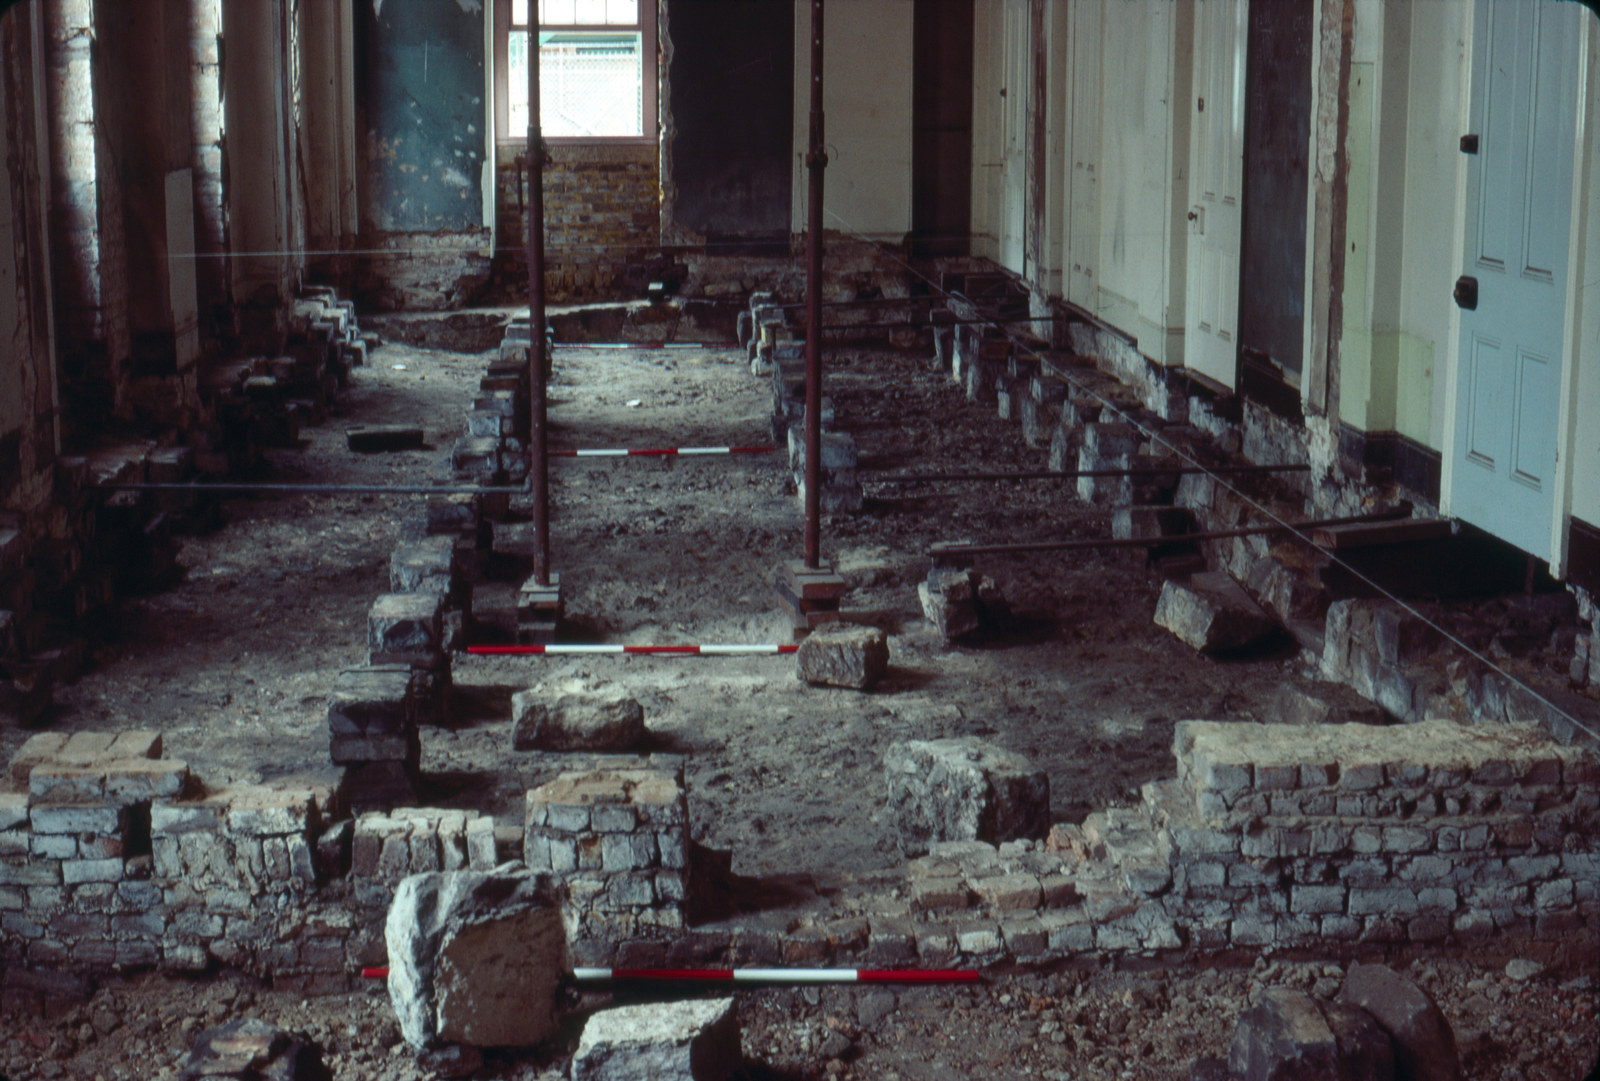 North-east ground floor room of Hyde Park Barracks after excavation, looking east, 1981. 